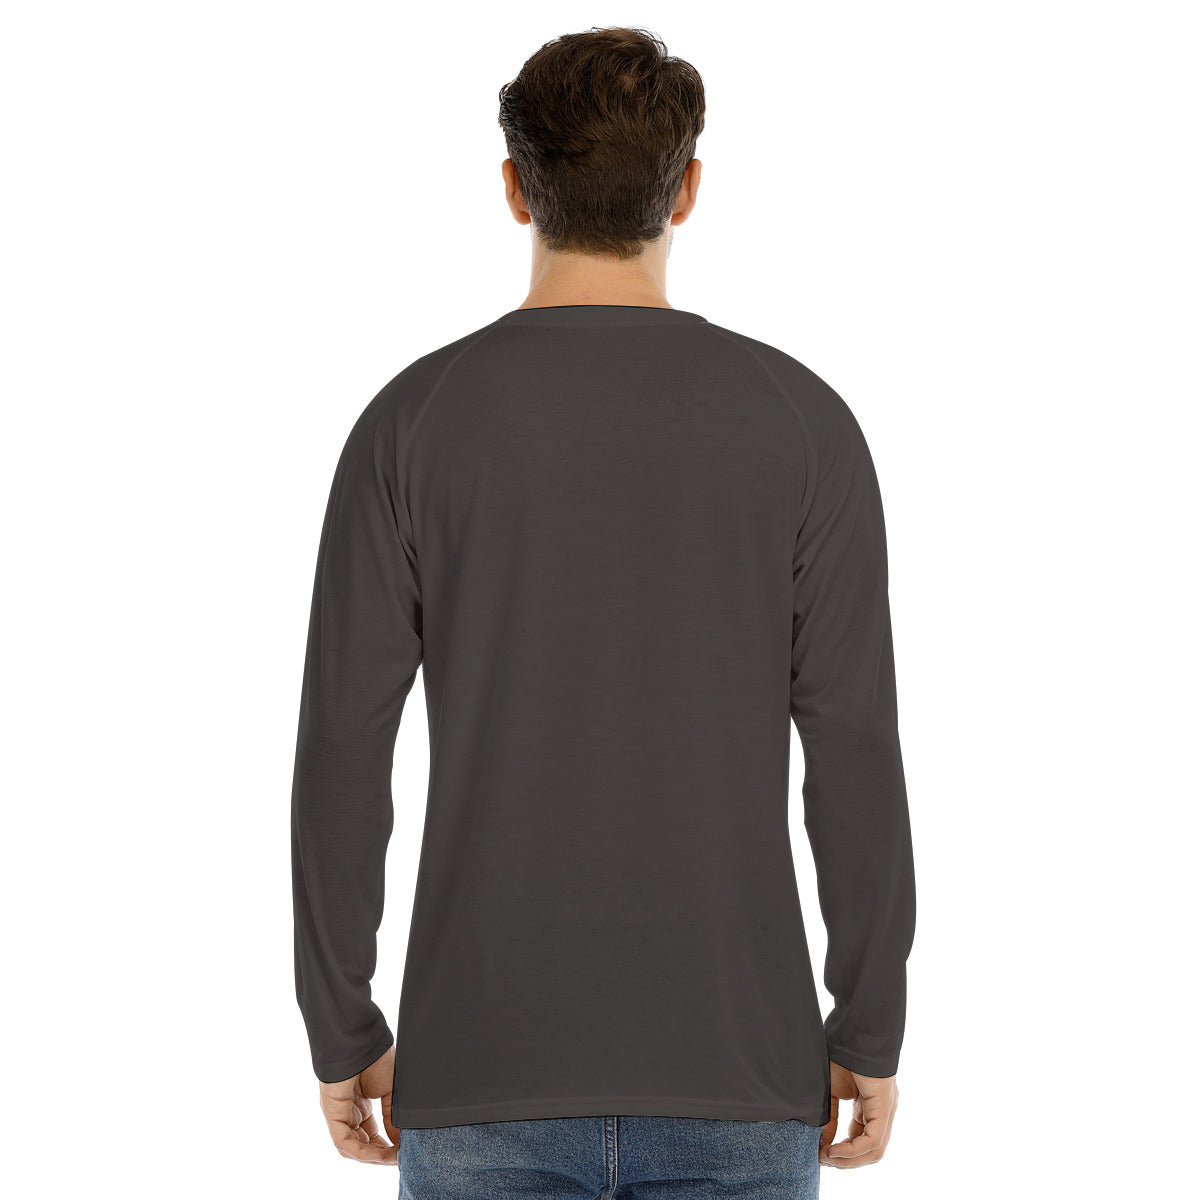 Chichen Itza 101 -- Men's Long Sleeve T-shirt With Raglan Sleeve